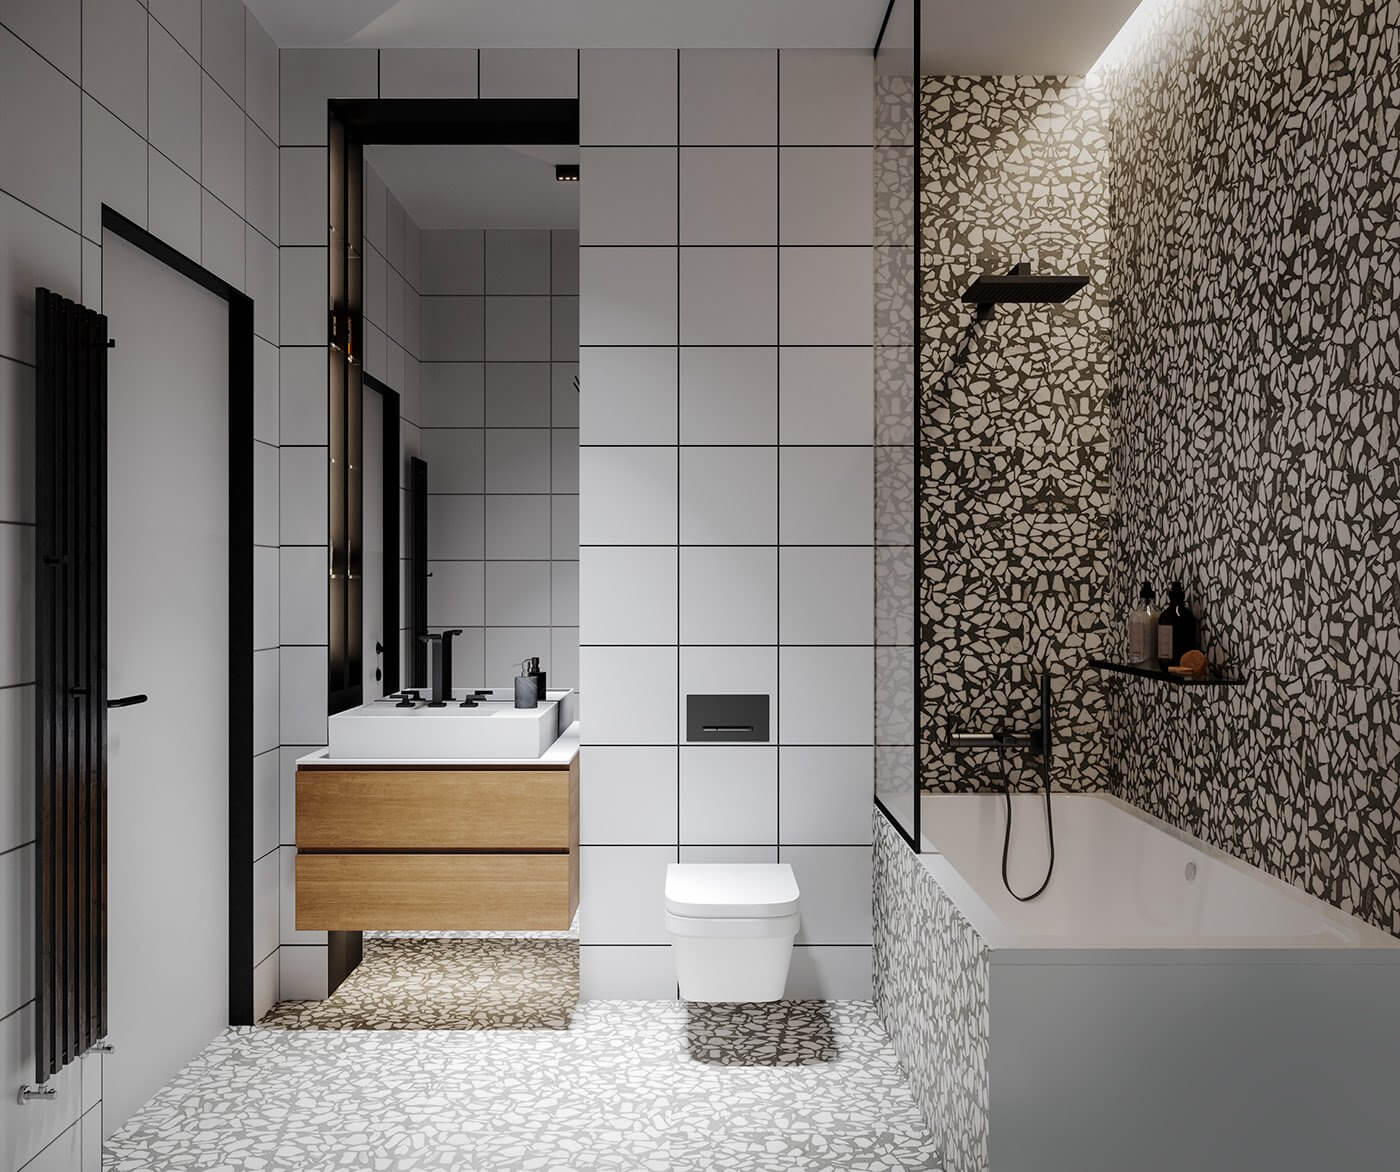 Zalomowa house bathroom shower bathtub - cgi visualization